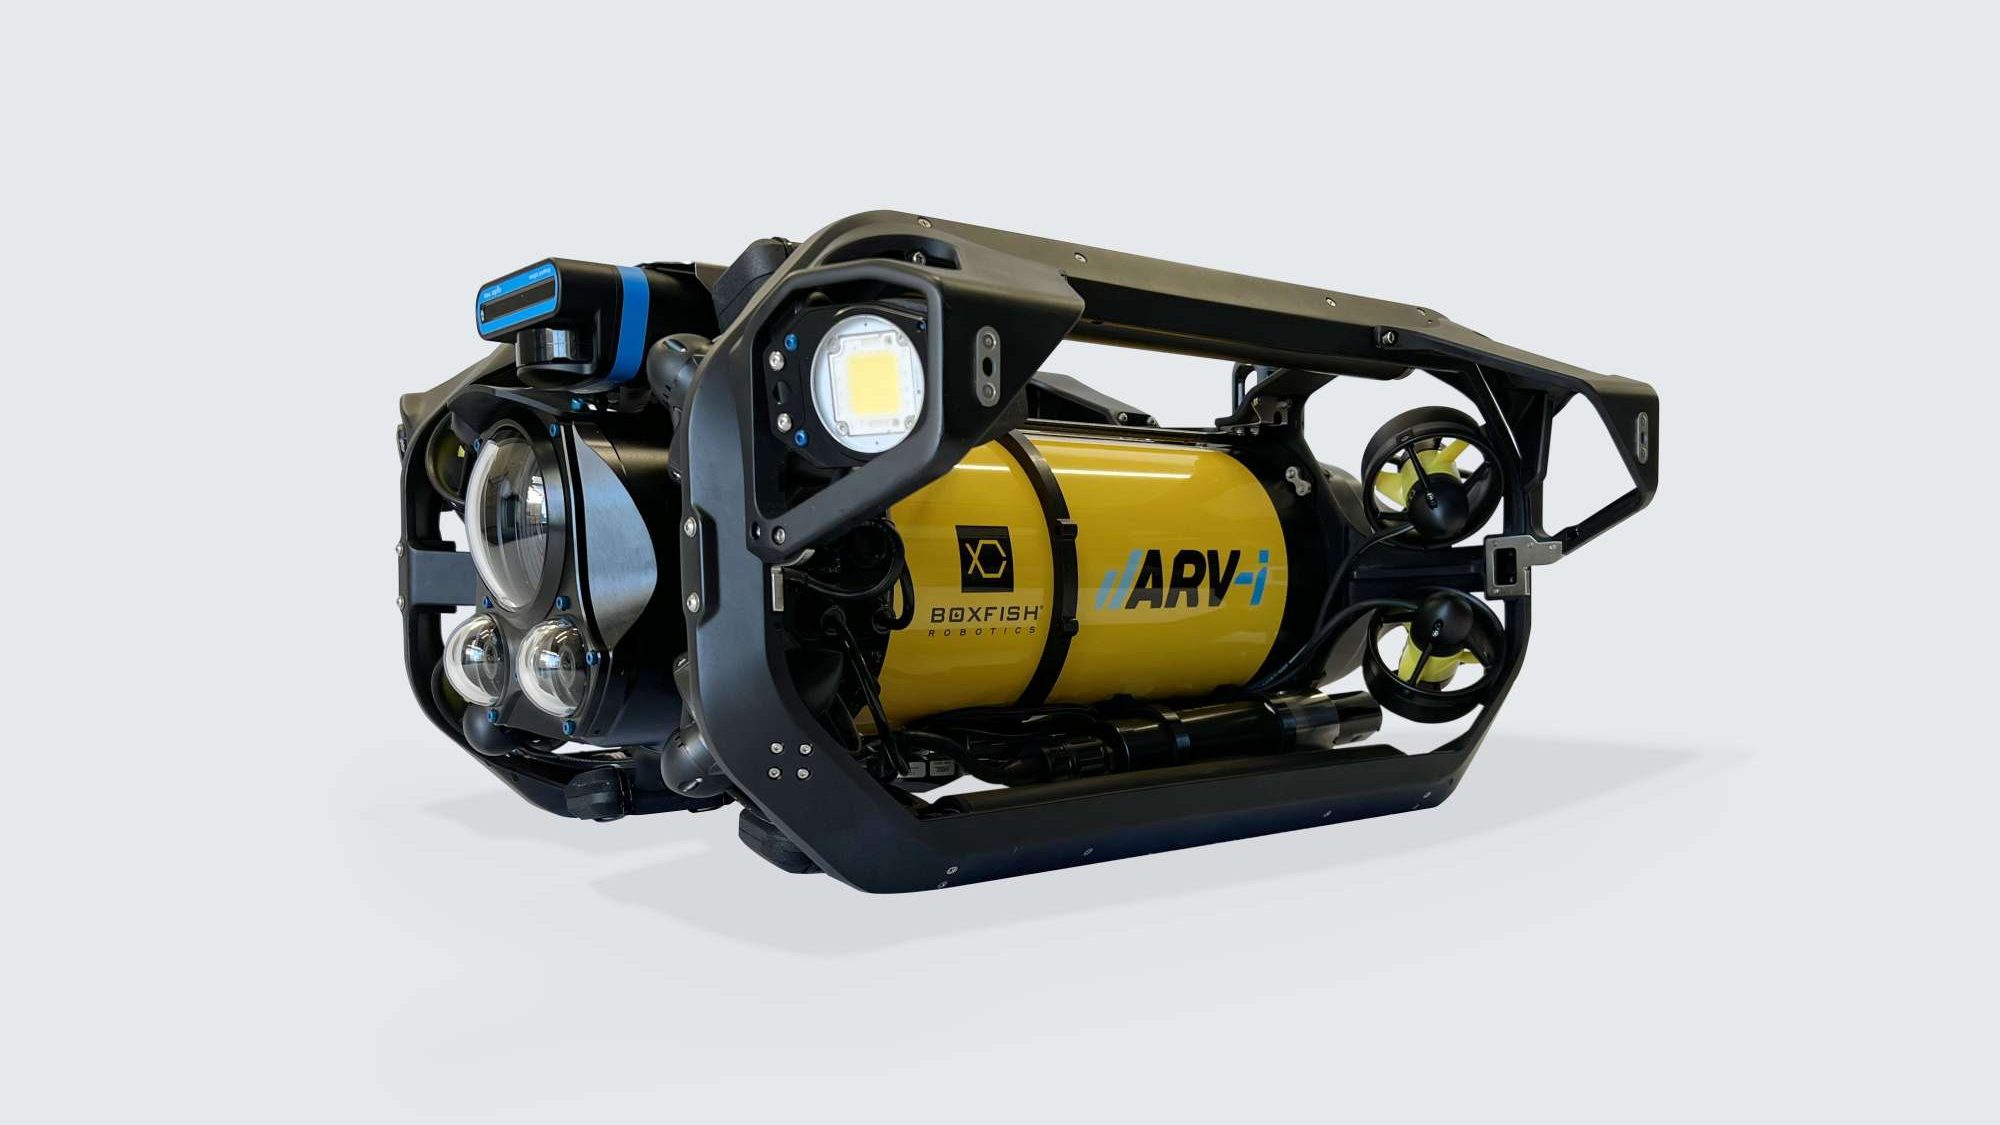 Boxfish Robotics HAUV robot ARV-i with 4K camera head, lighting, forward looking sonar, DVL and miniCTD